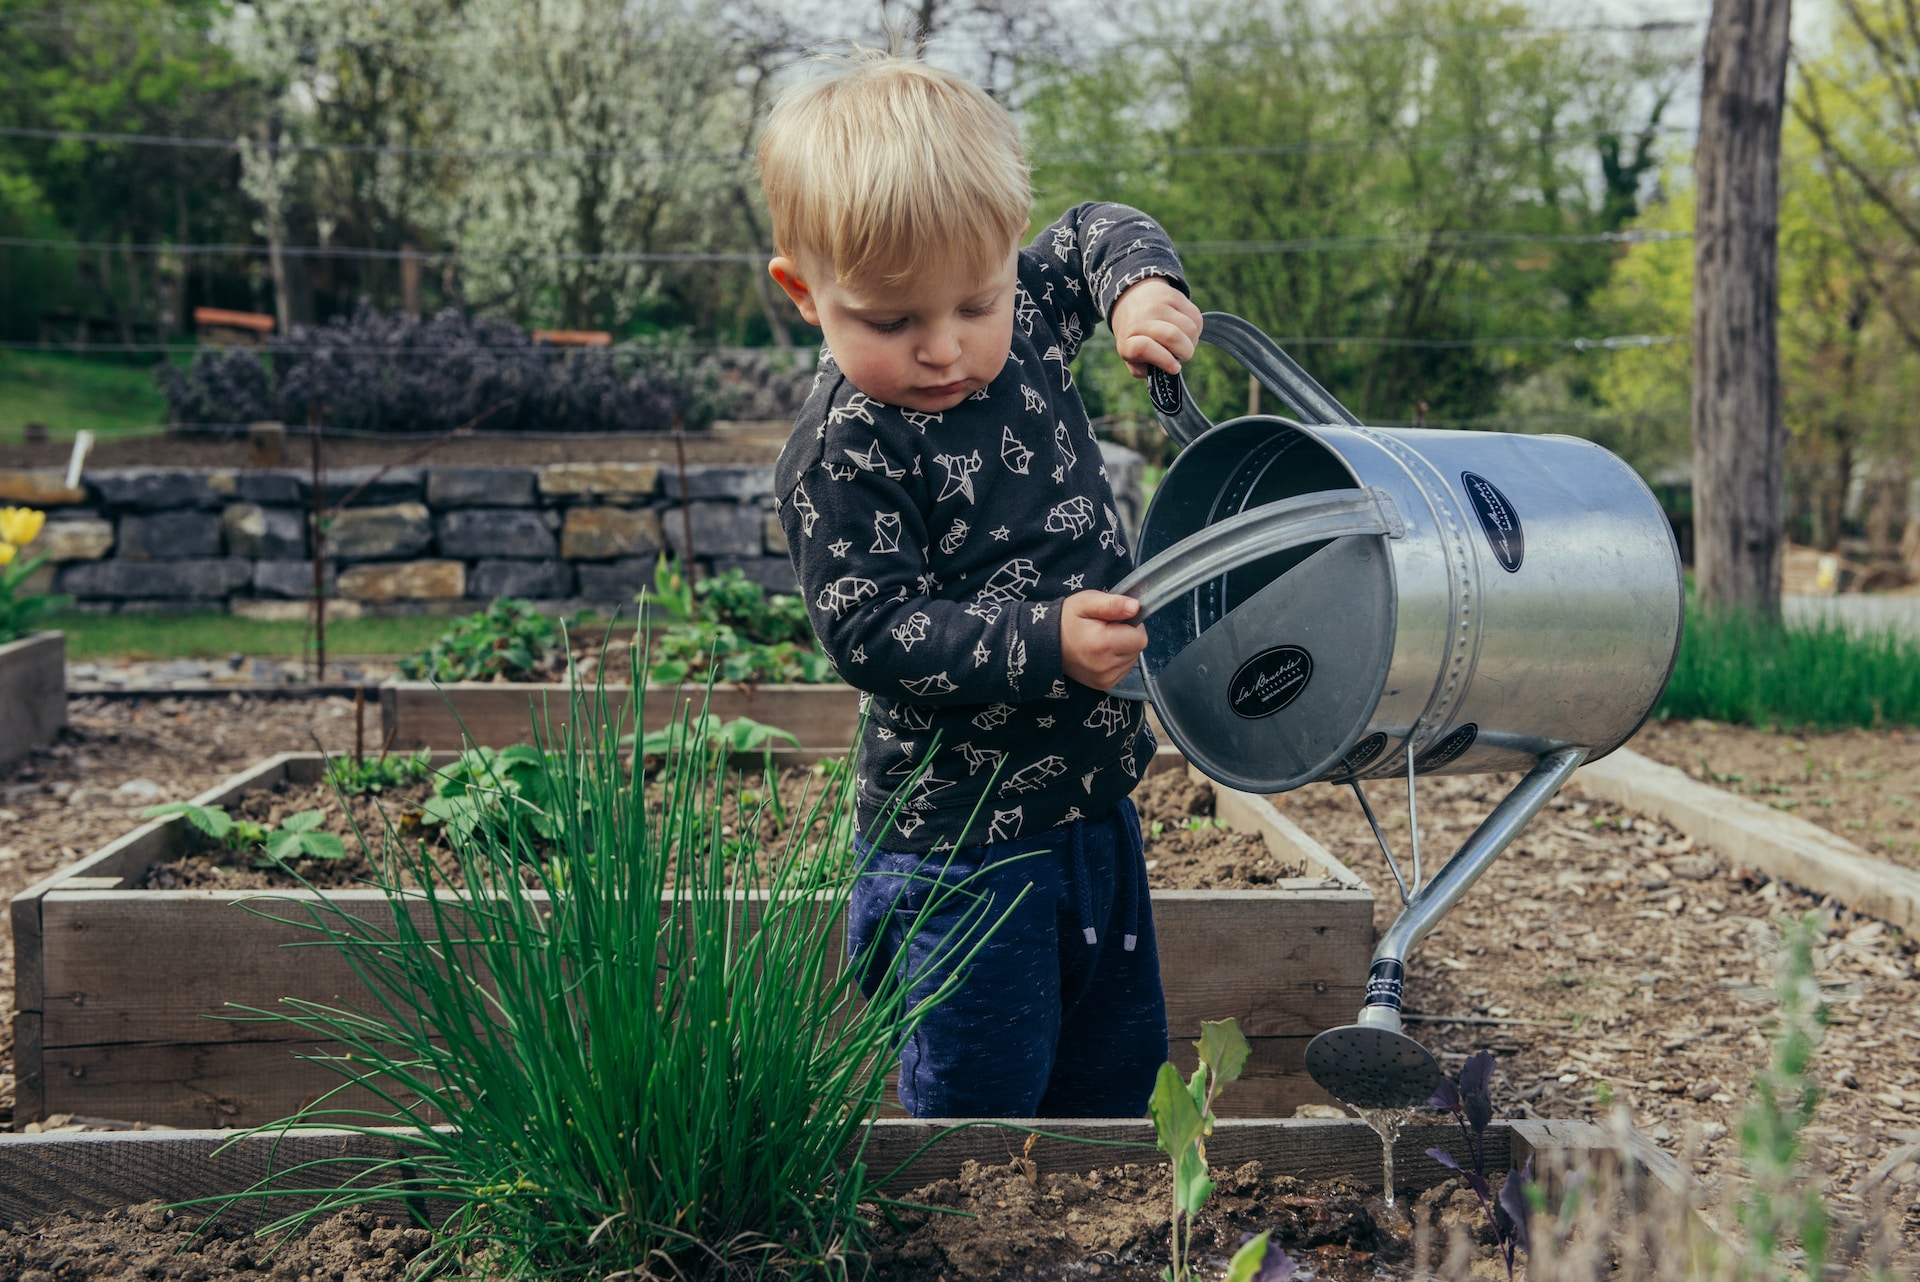 Autistic child gardening, fostering responsibility.